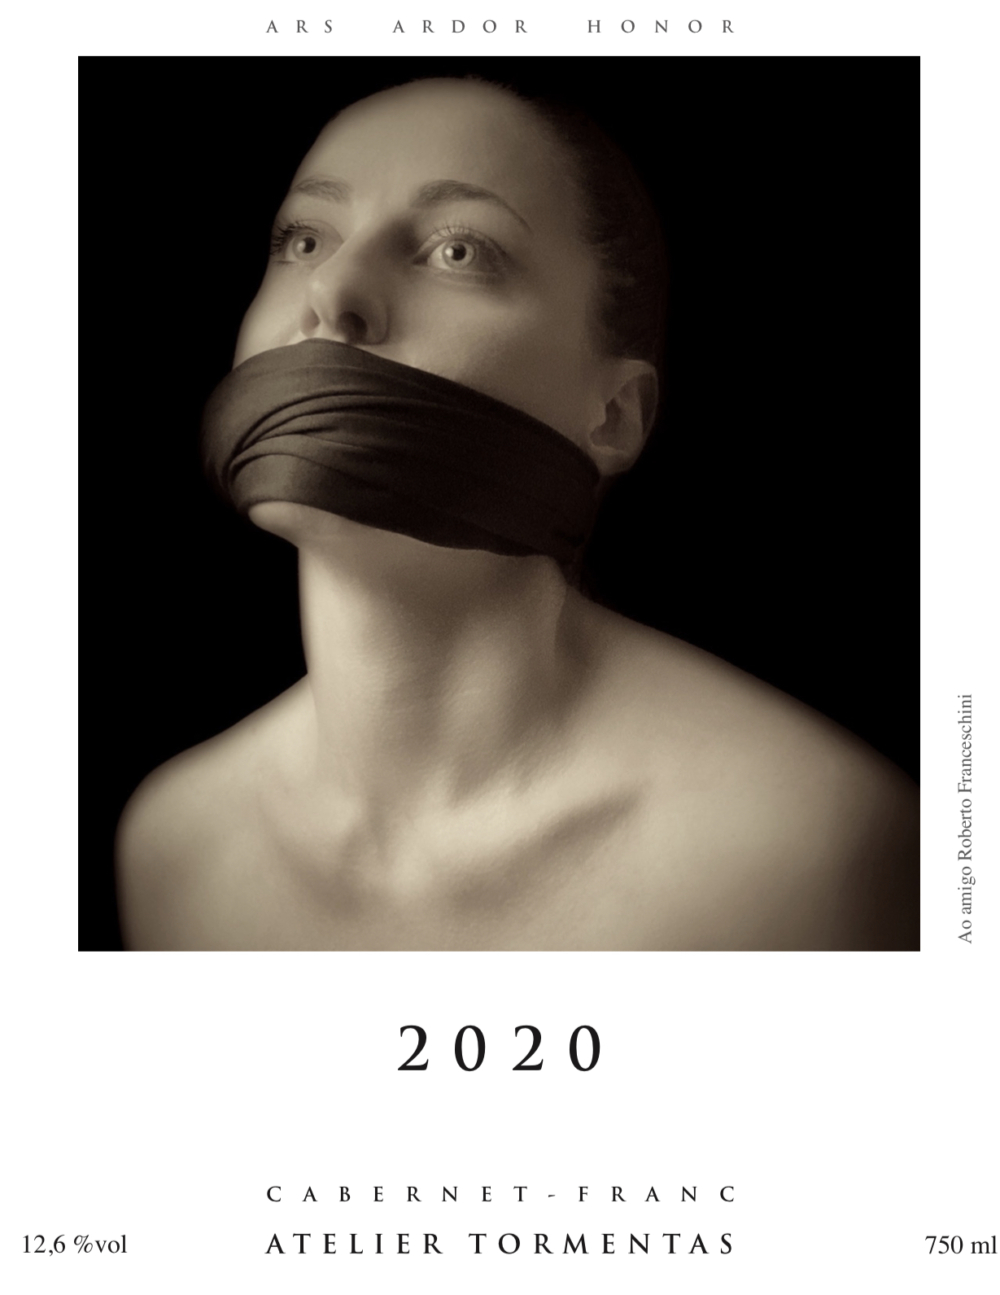 CABERNET-FRANC 2020